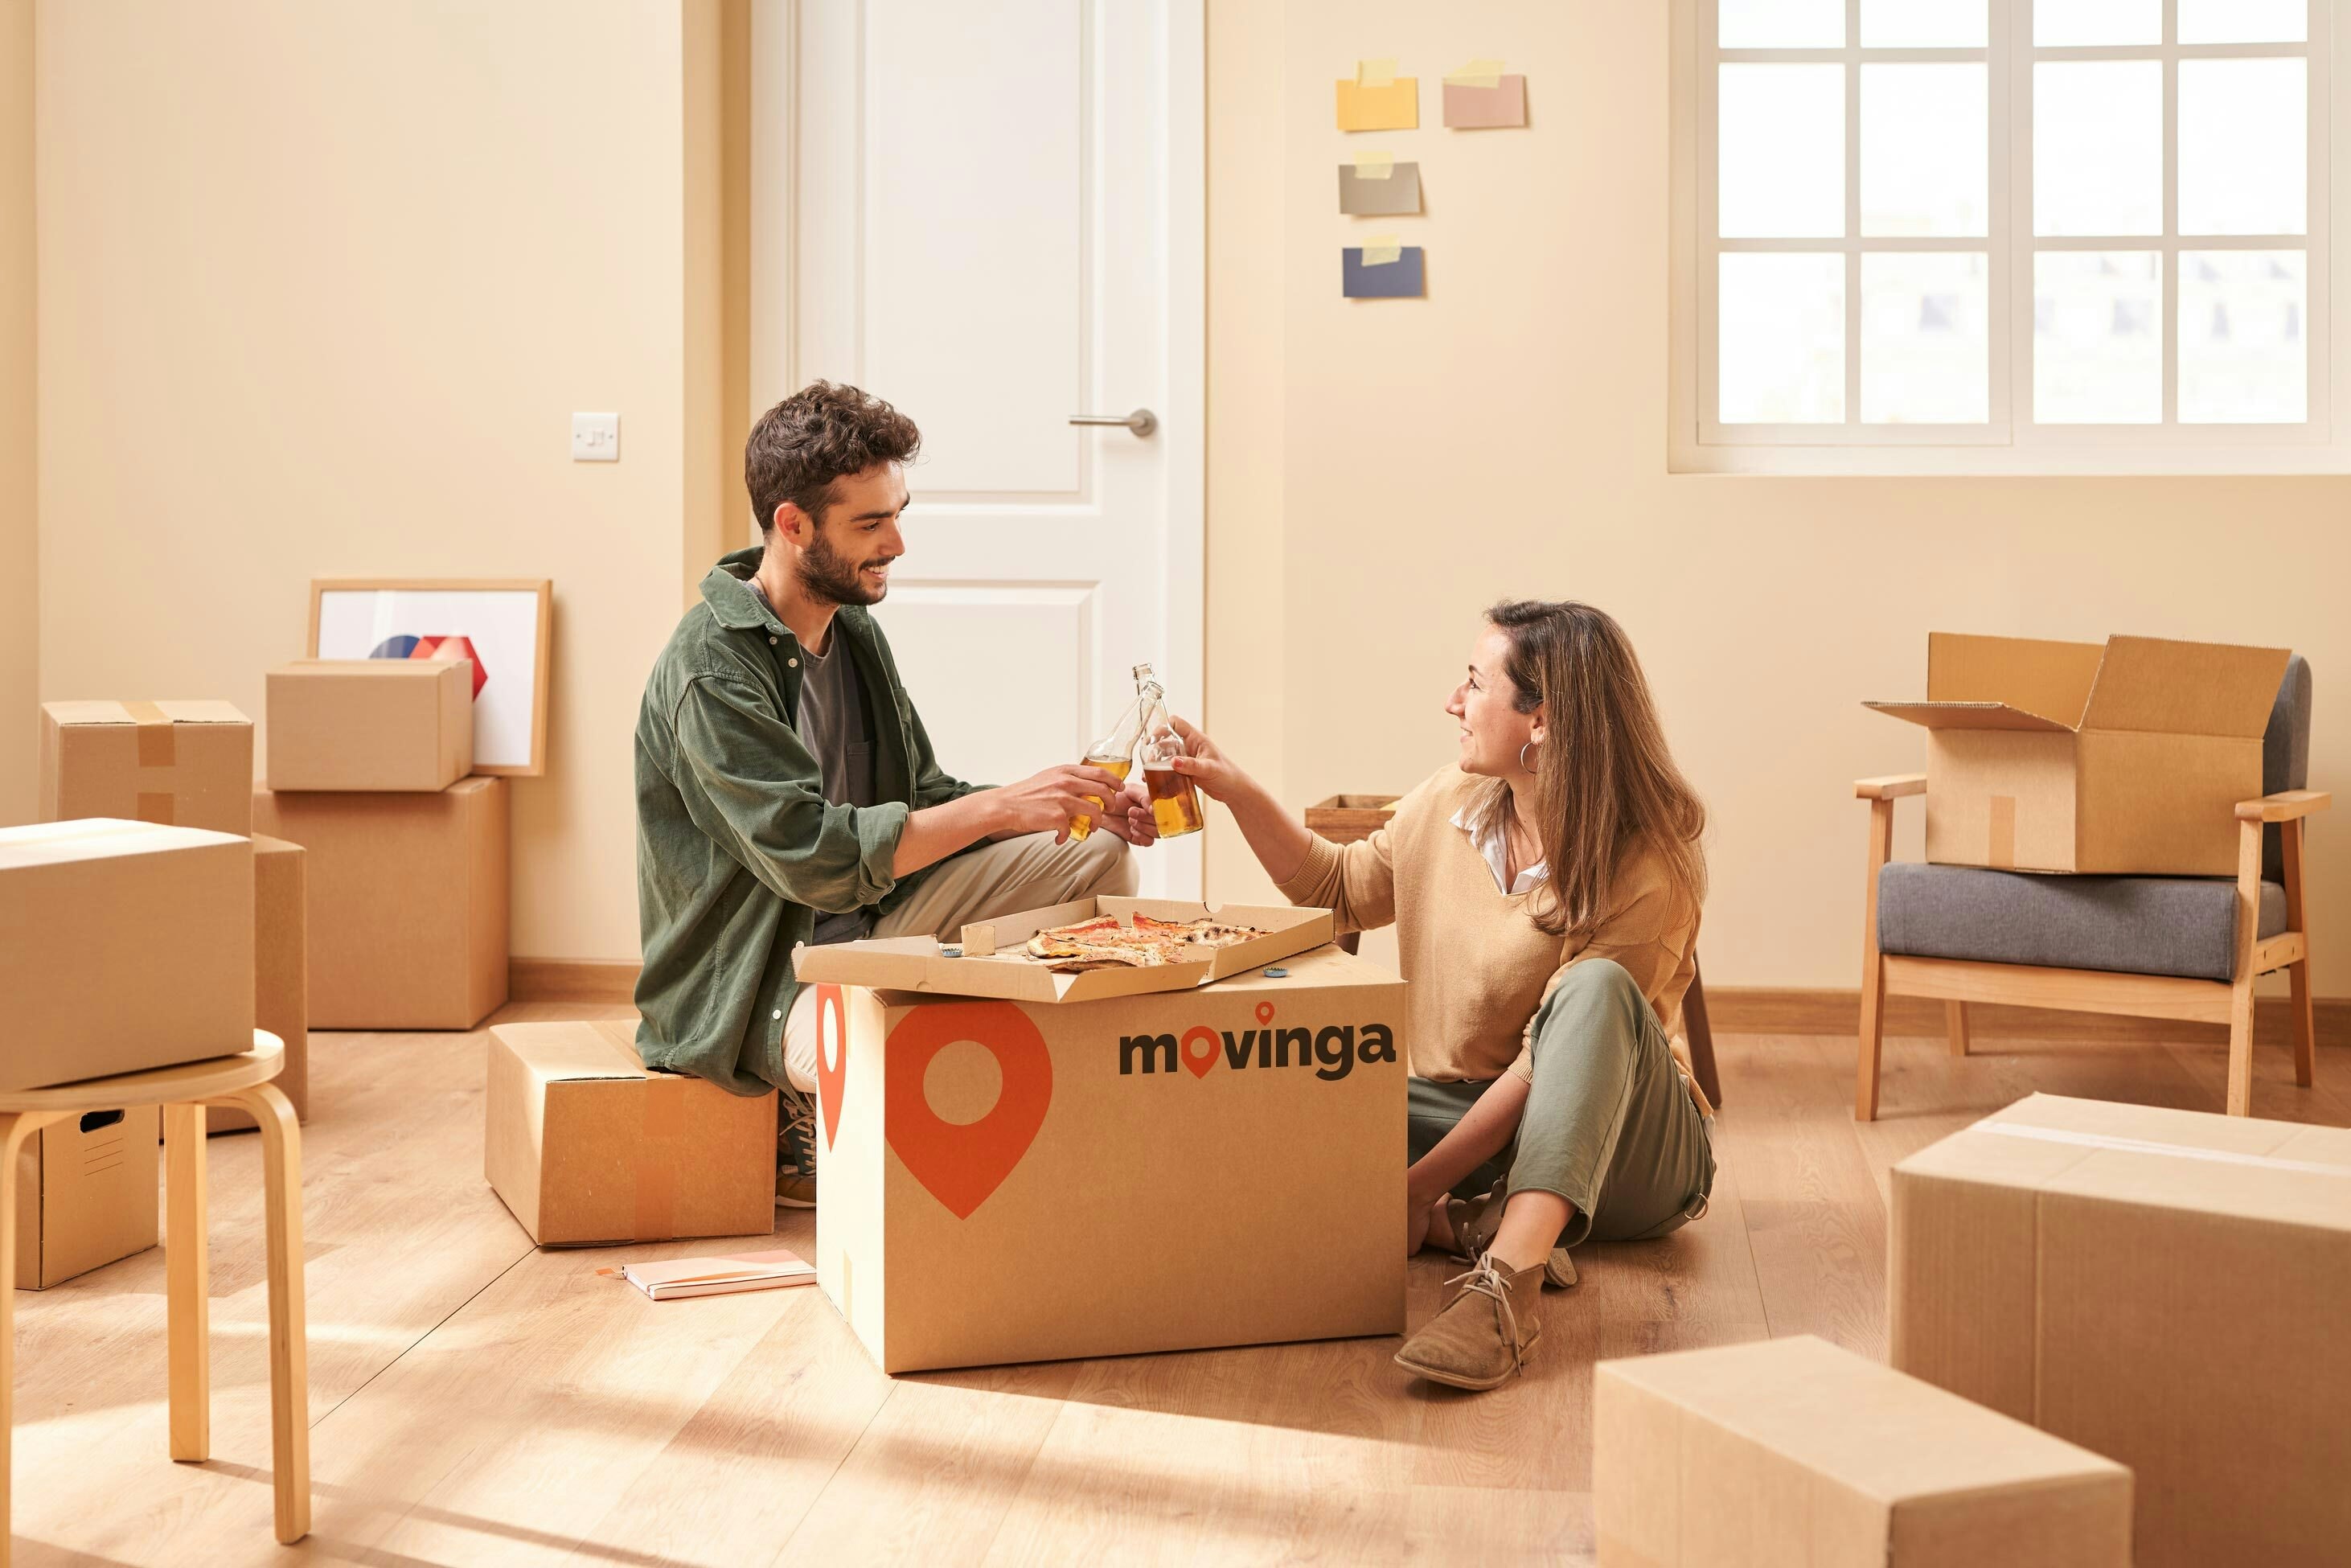 Movinga couple with boxes